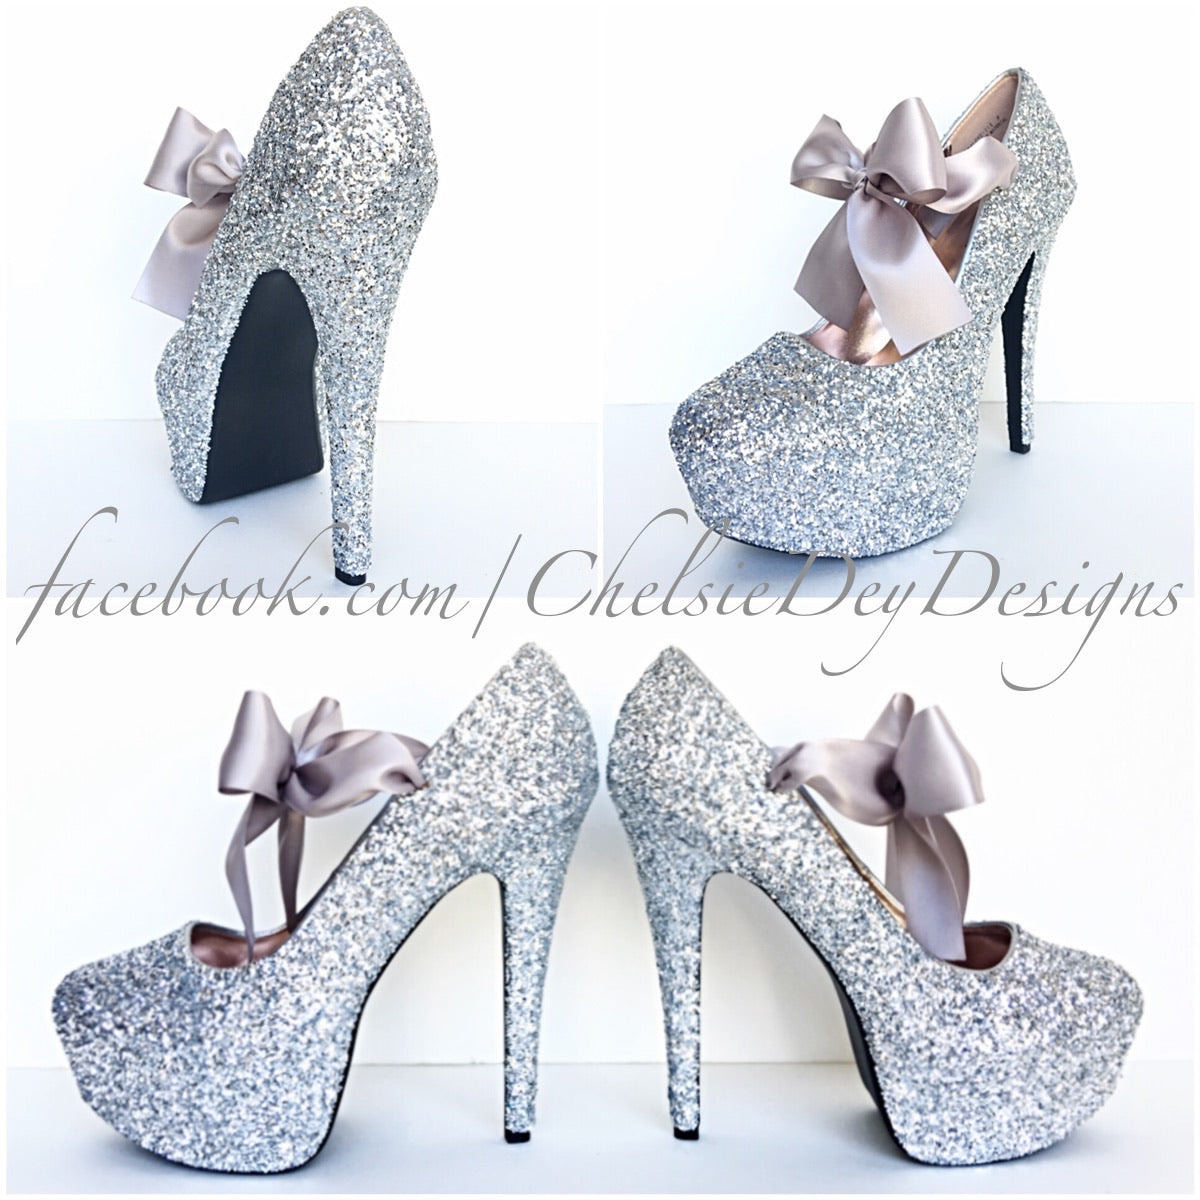 silver glitter prom heels